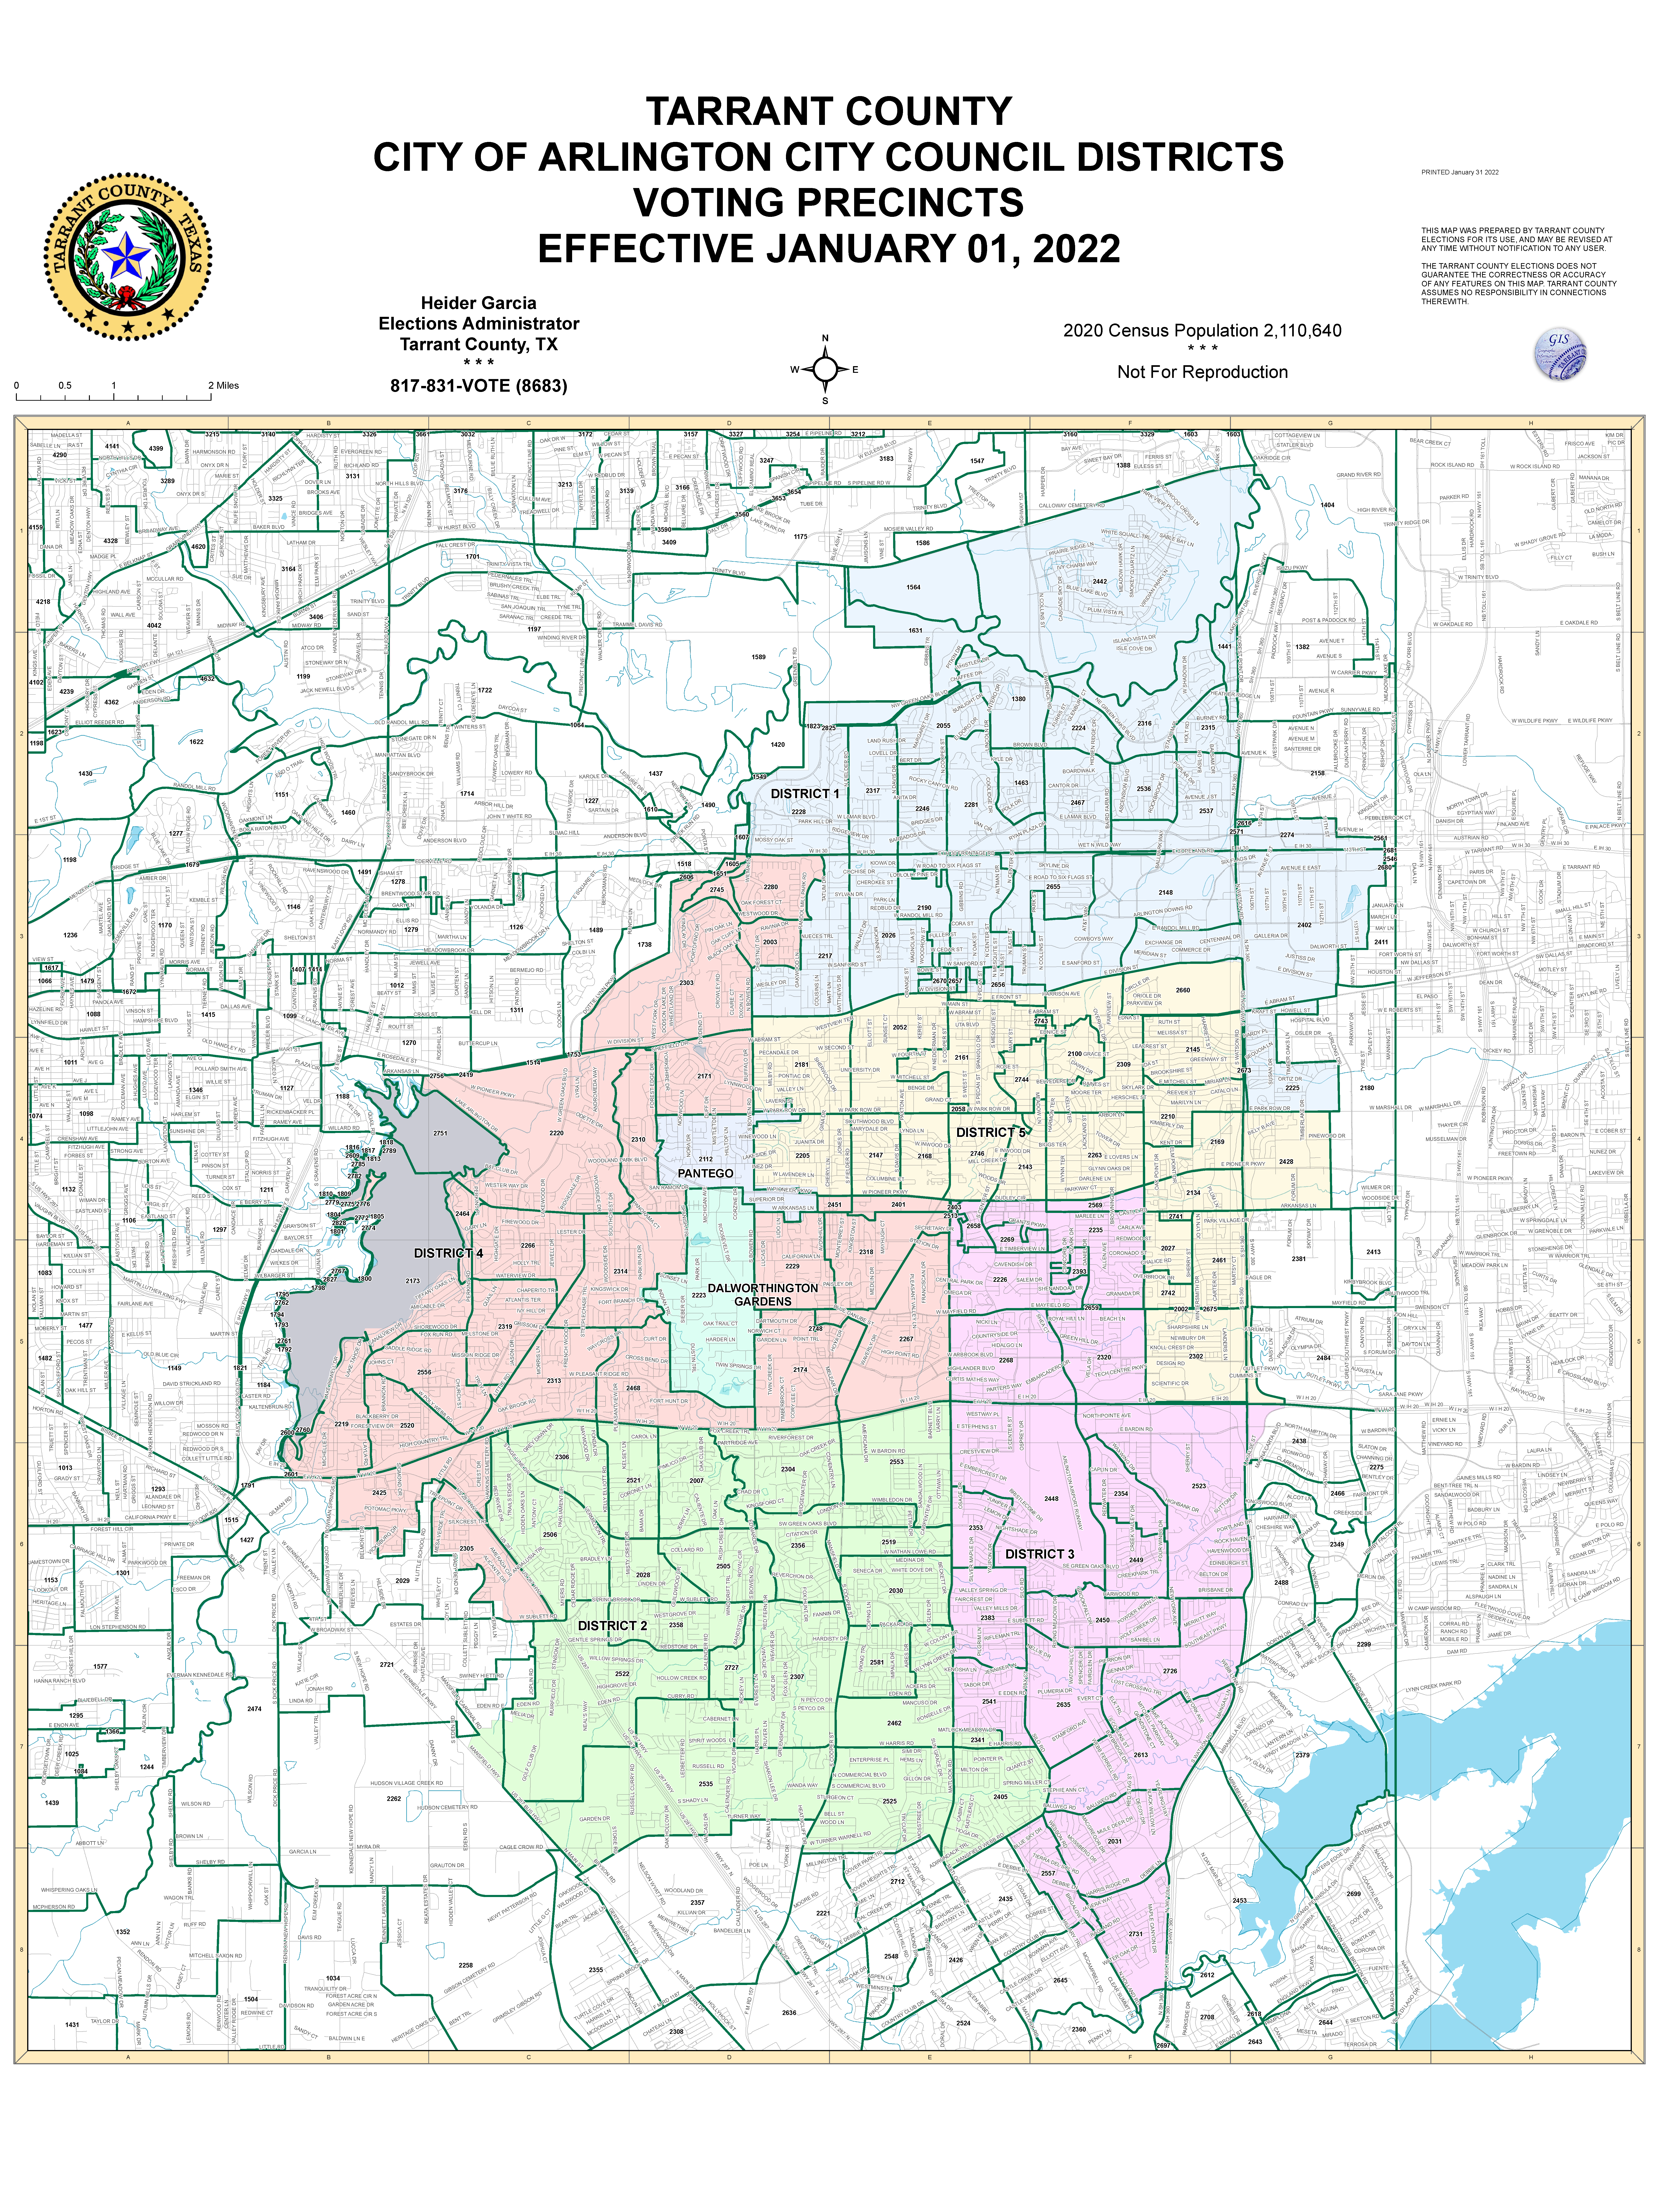 CIty of Arlington Council Districts Map